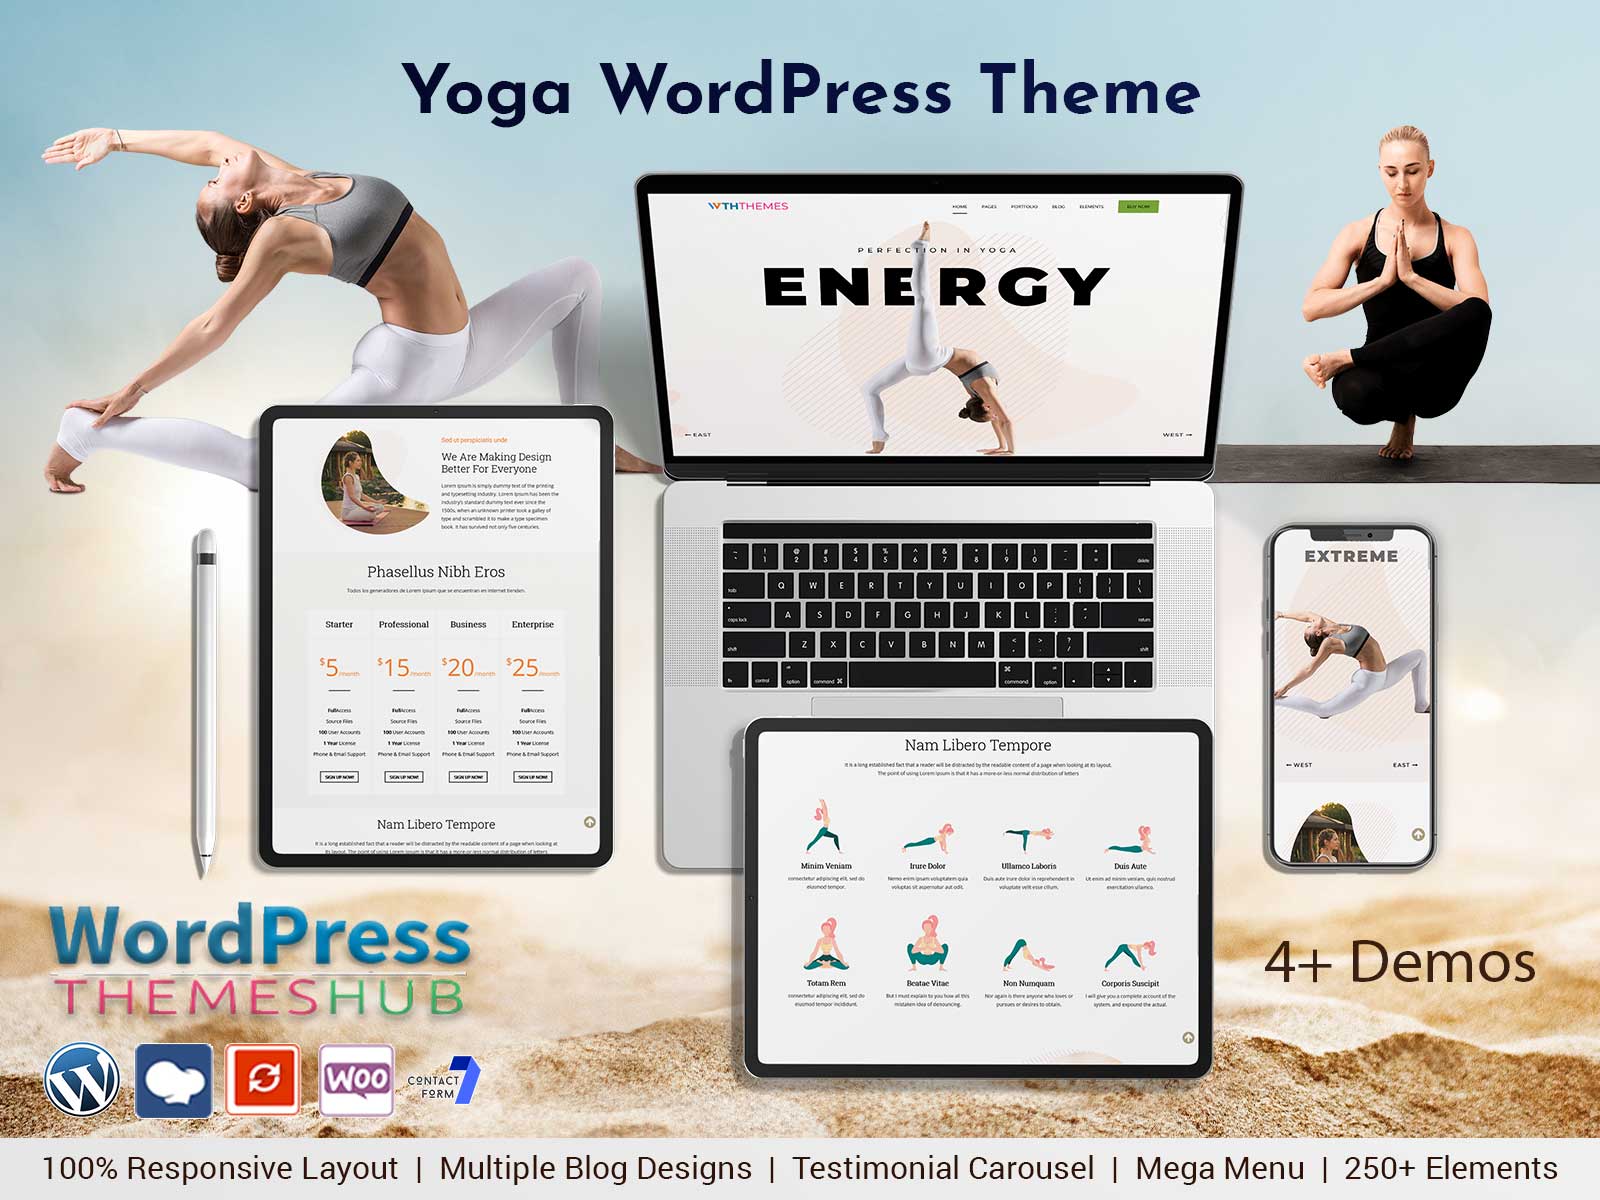 Best Yoga WordPress Theme For Yoga Studio Websites